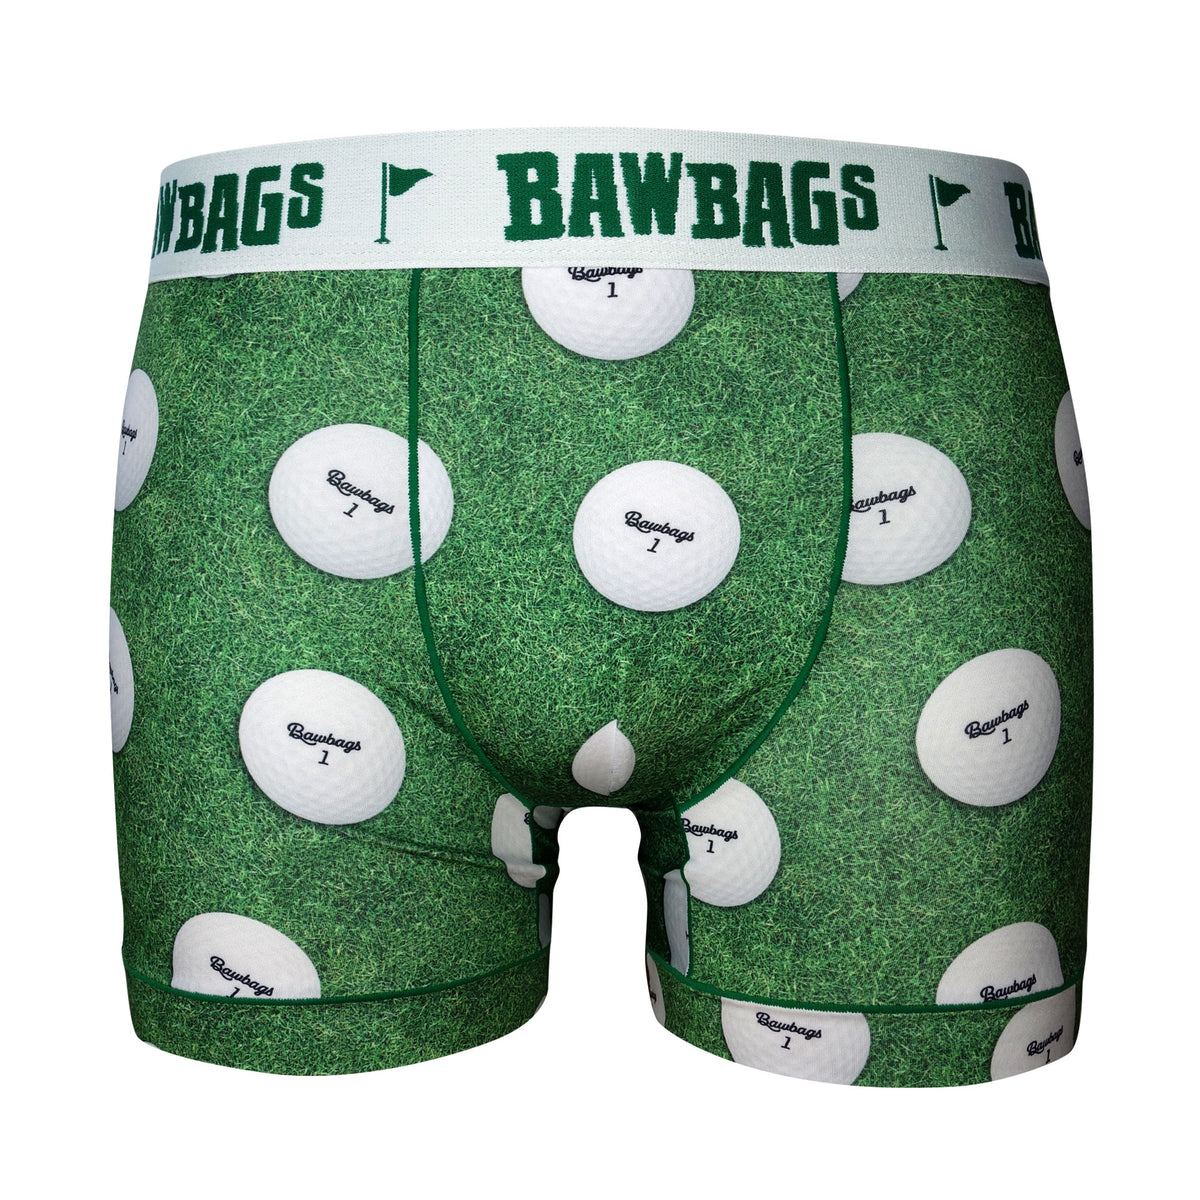 BAWBAGS underwear